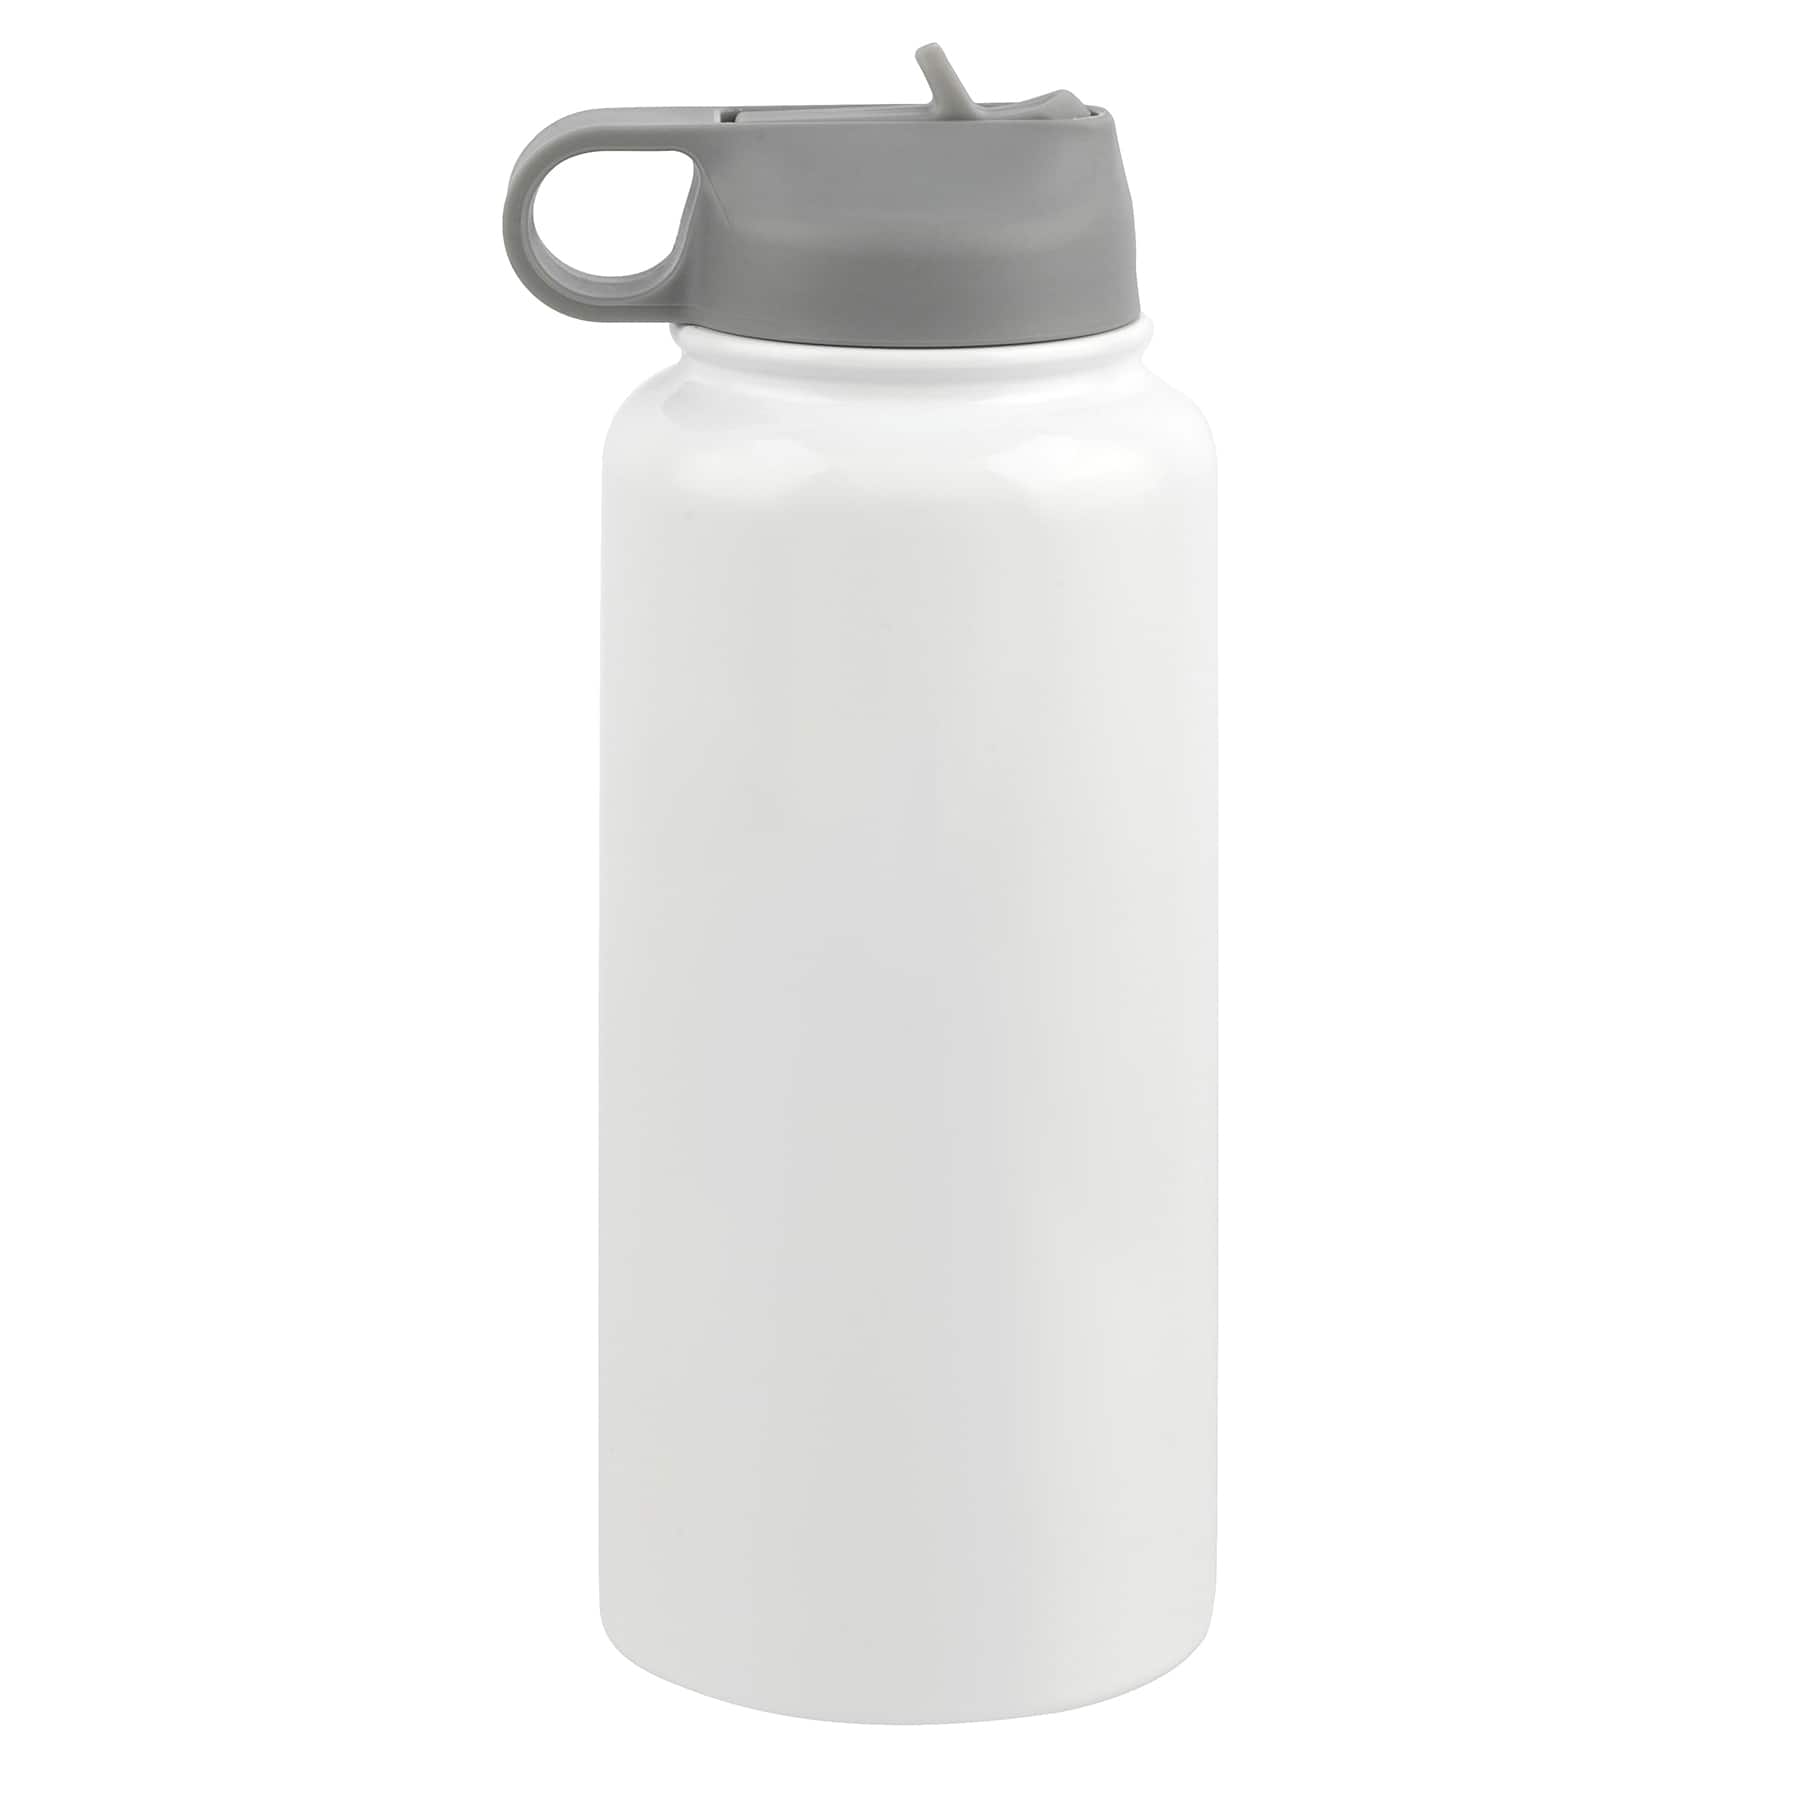 Celebrate It Stainless Steel Water Bottle - White - 32 oz